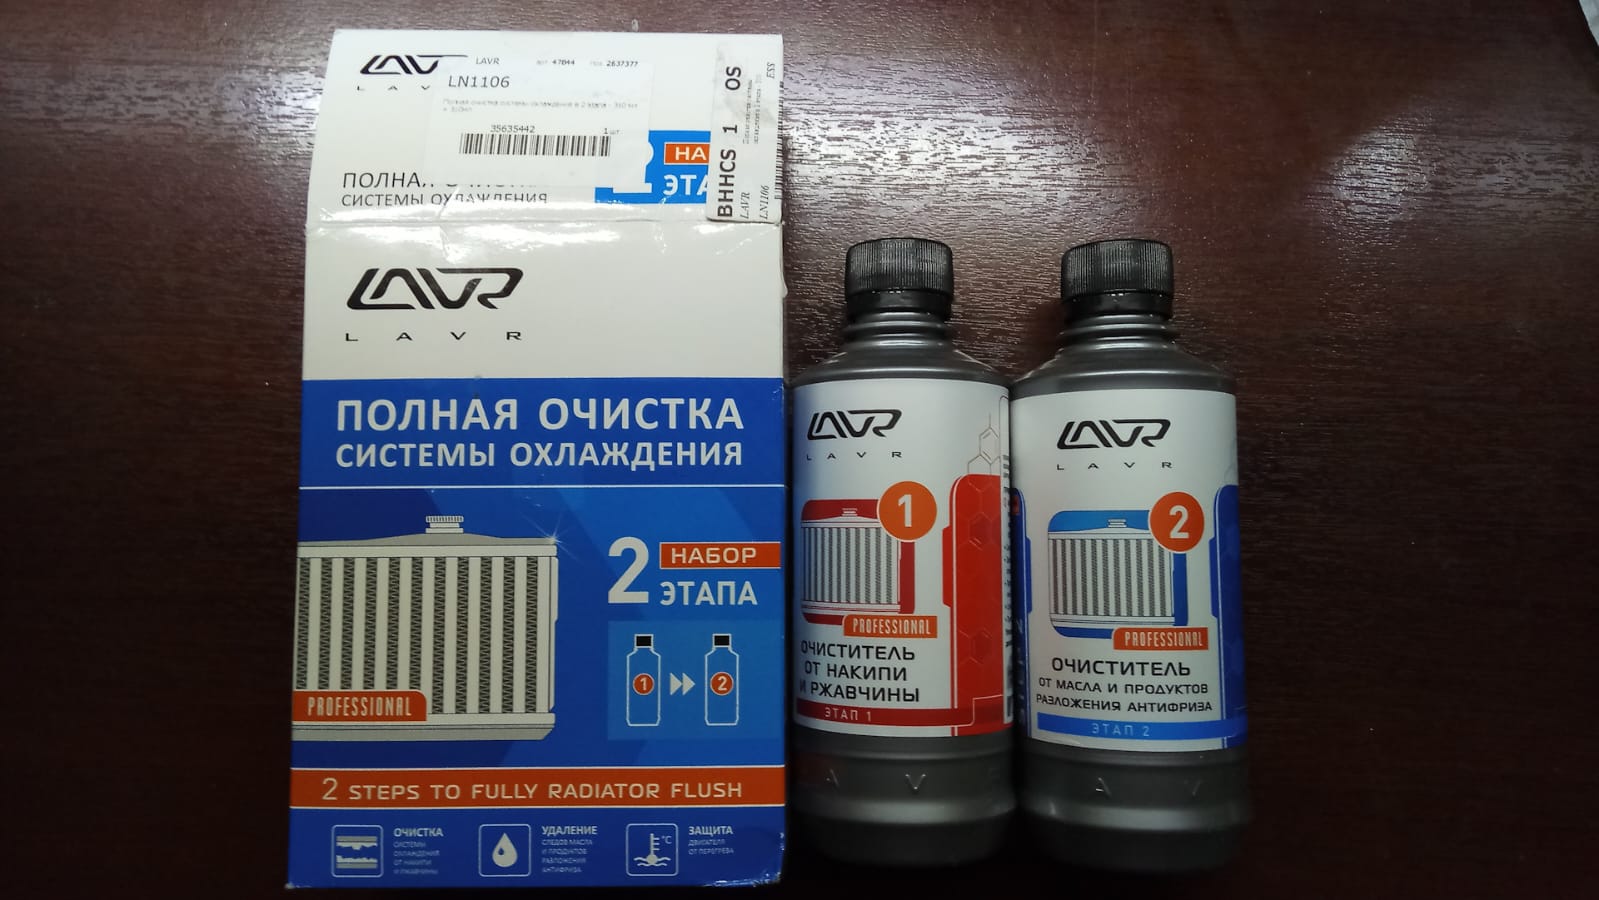 LAVRln1106Набор полная очистка системы охлаждения в 2 этапа 2 steps to fully radiator flush 310 мл. / 310 мл. LAVR Ln1106